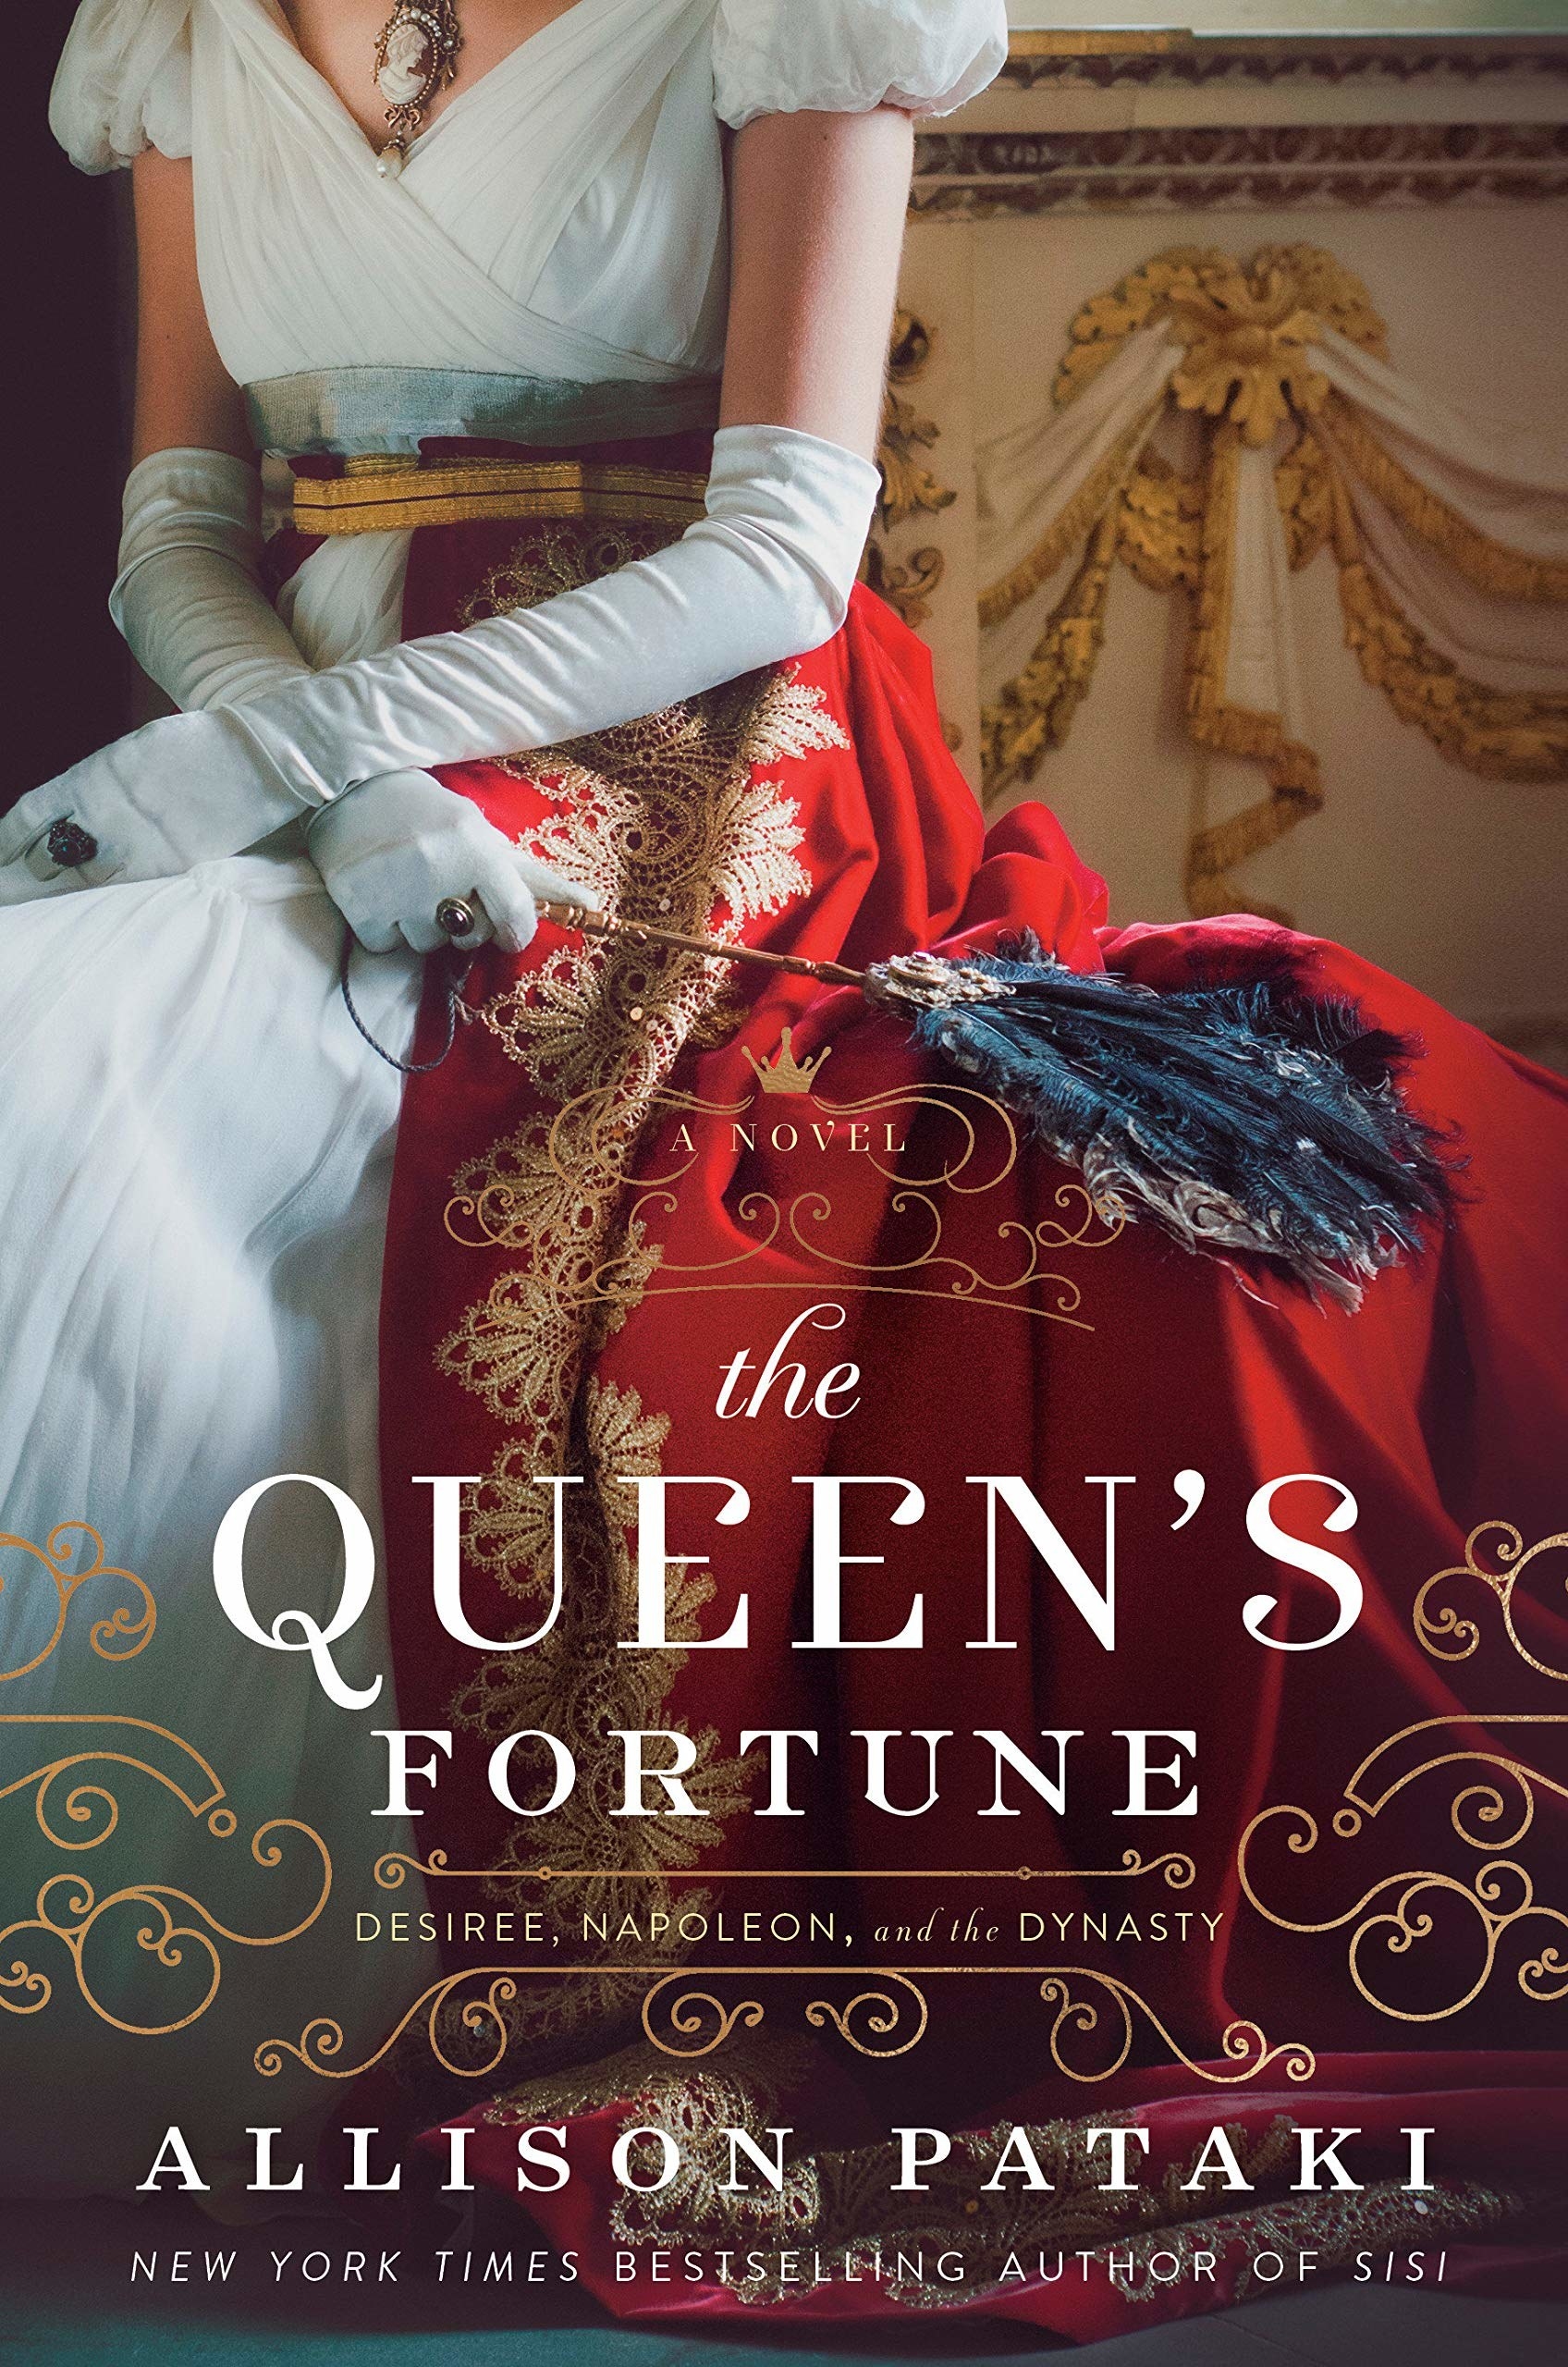 Book: The Queen’s Fortune by Allison Pataki